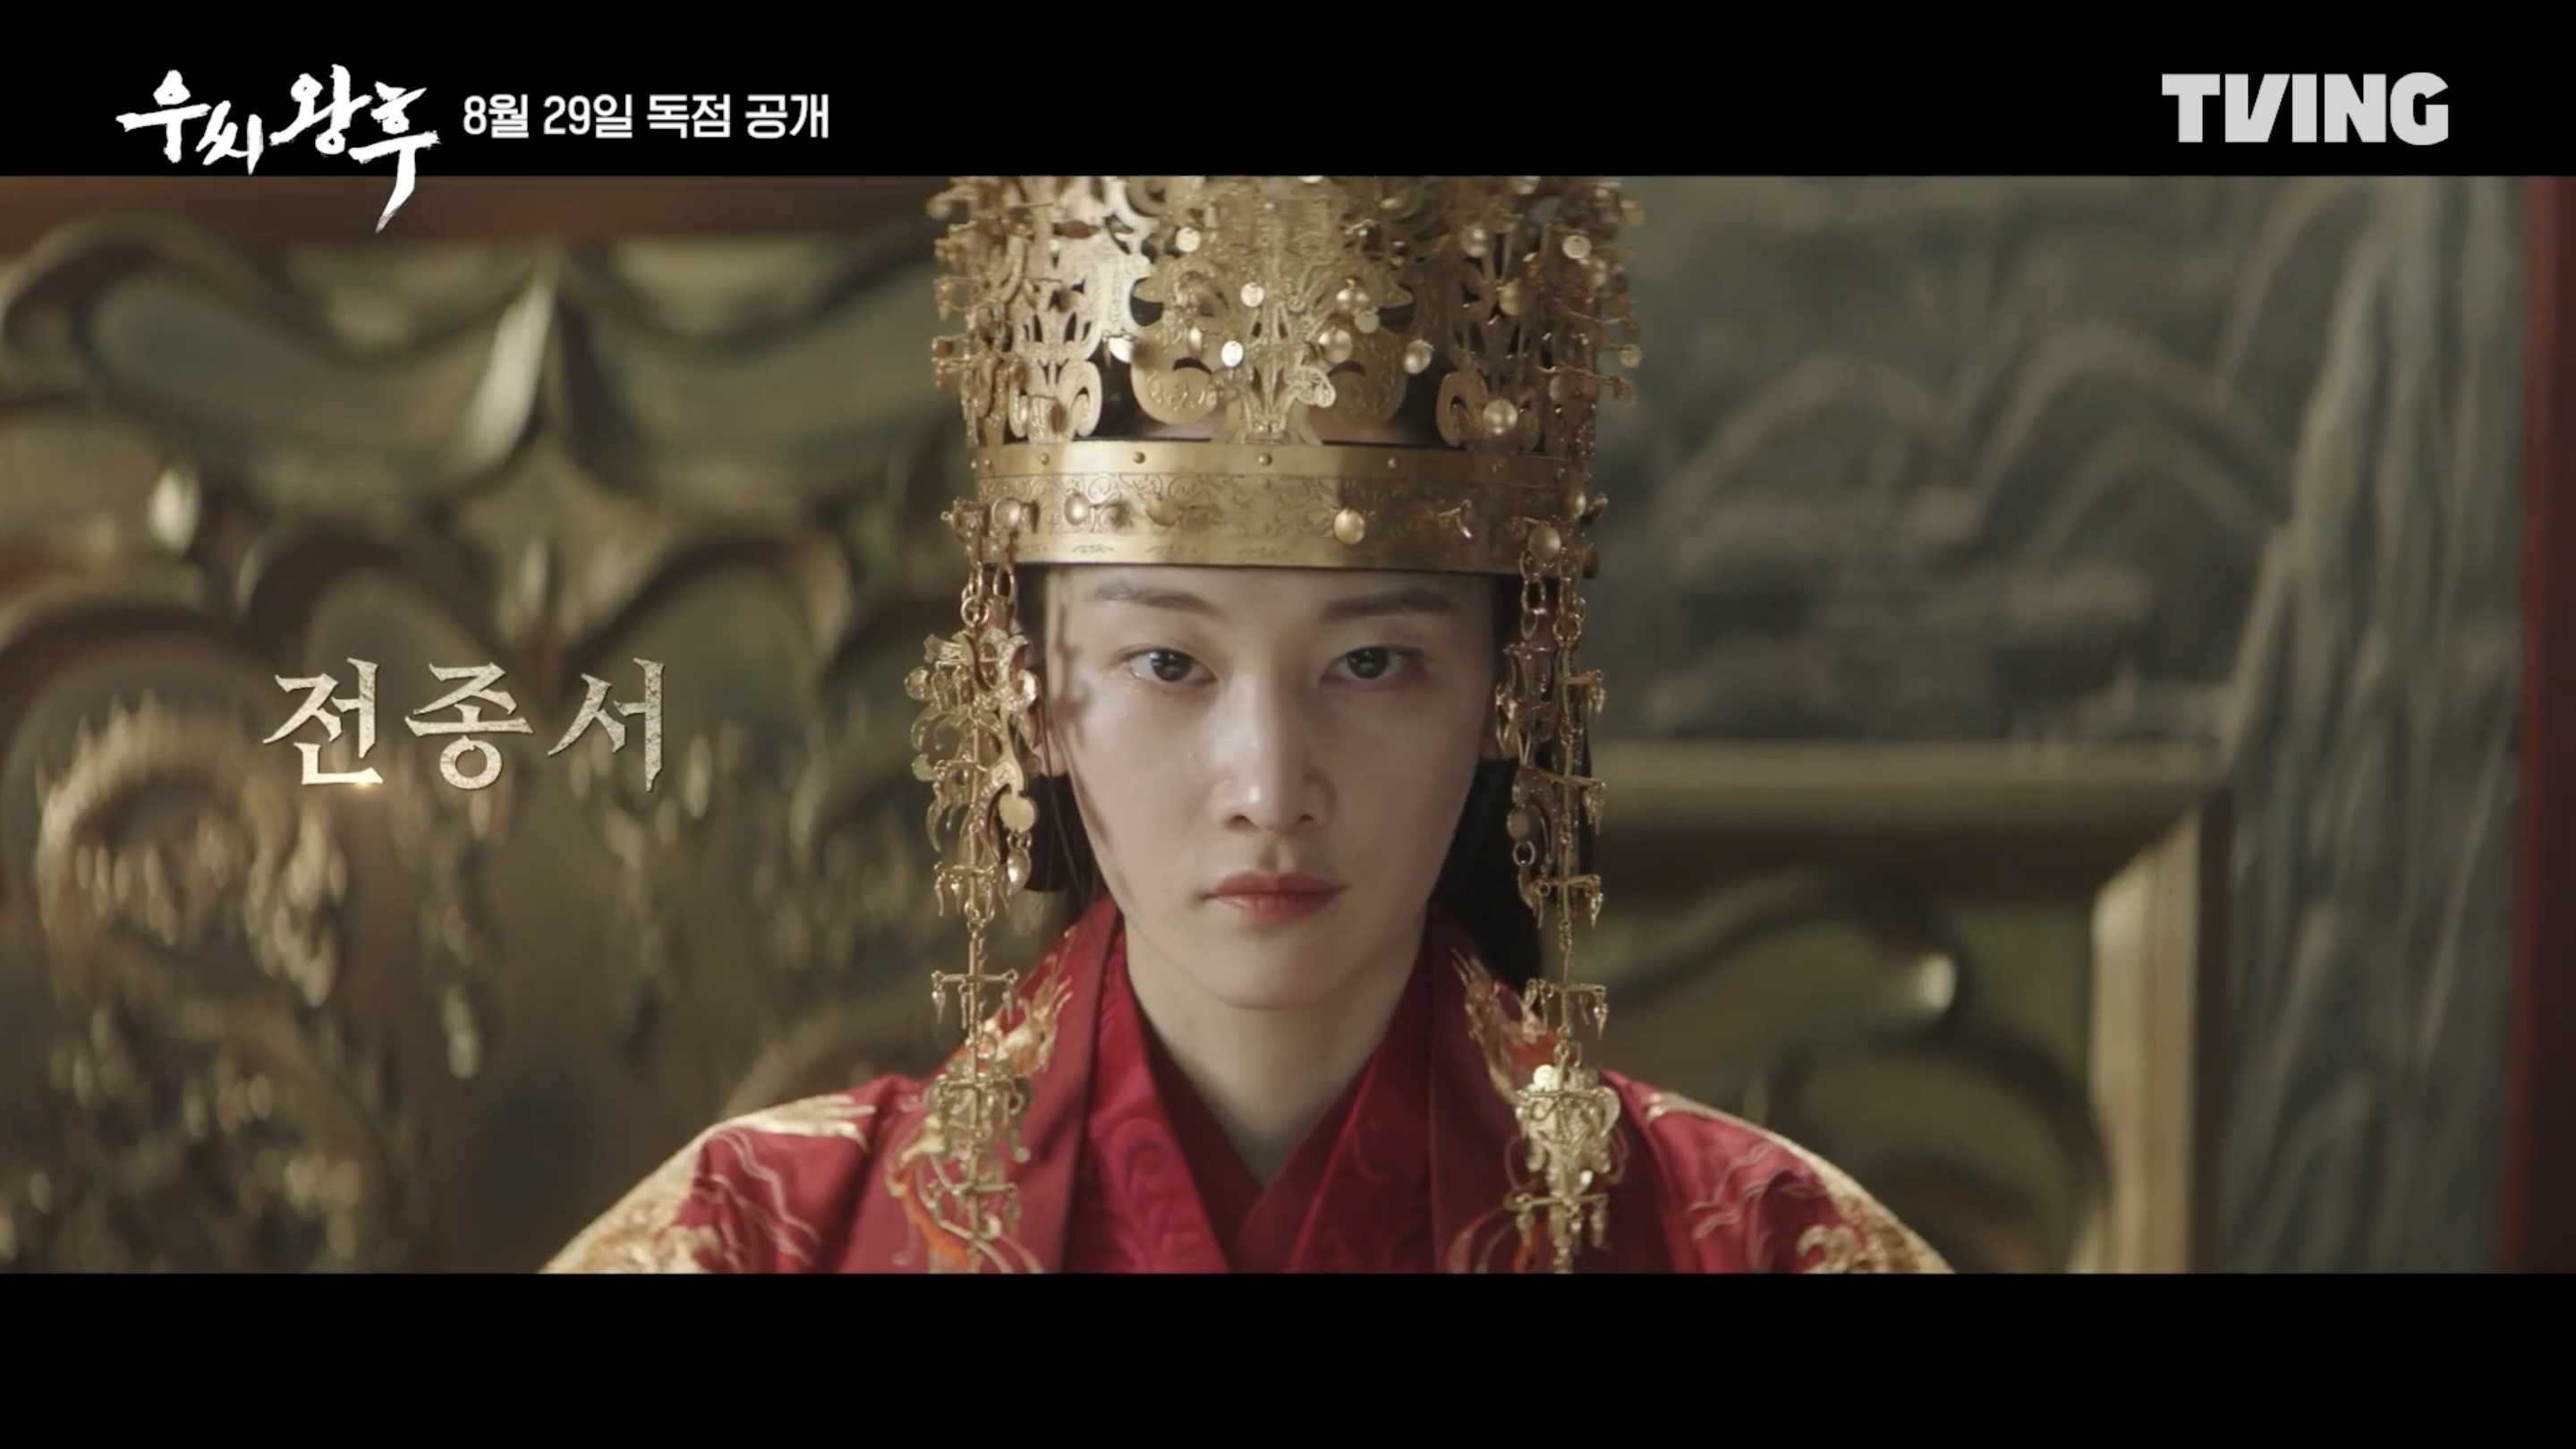 Jeon Jong-seo confronts a power struggle as Queen Woo